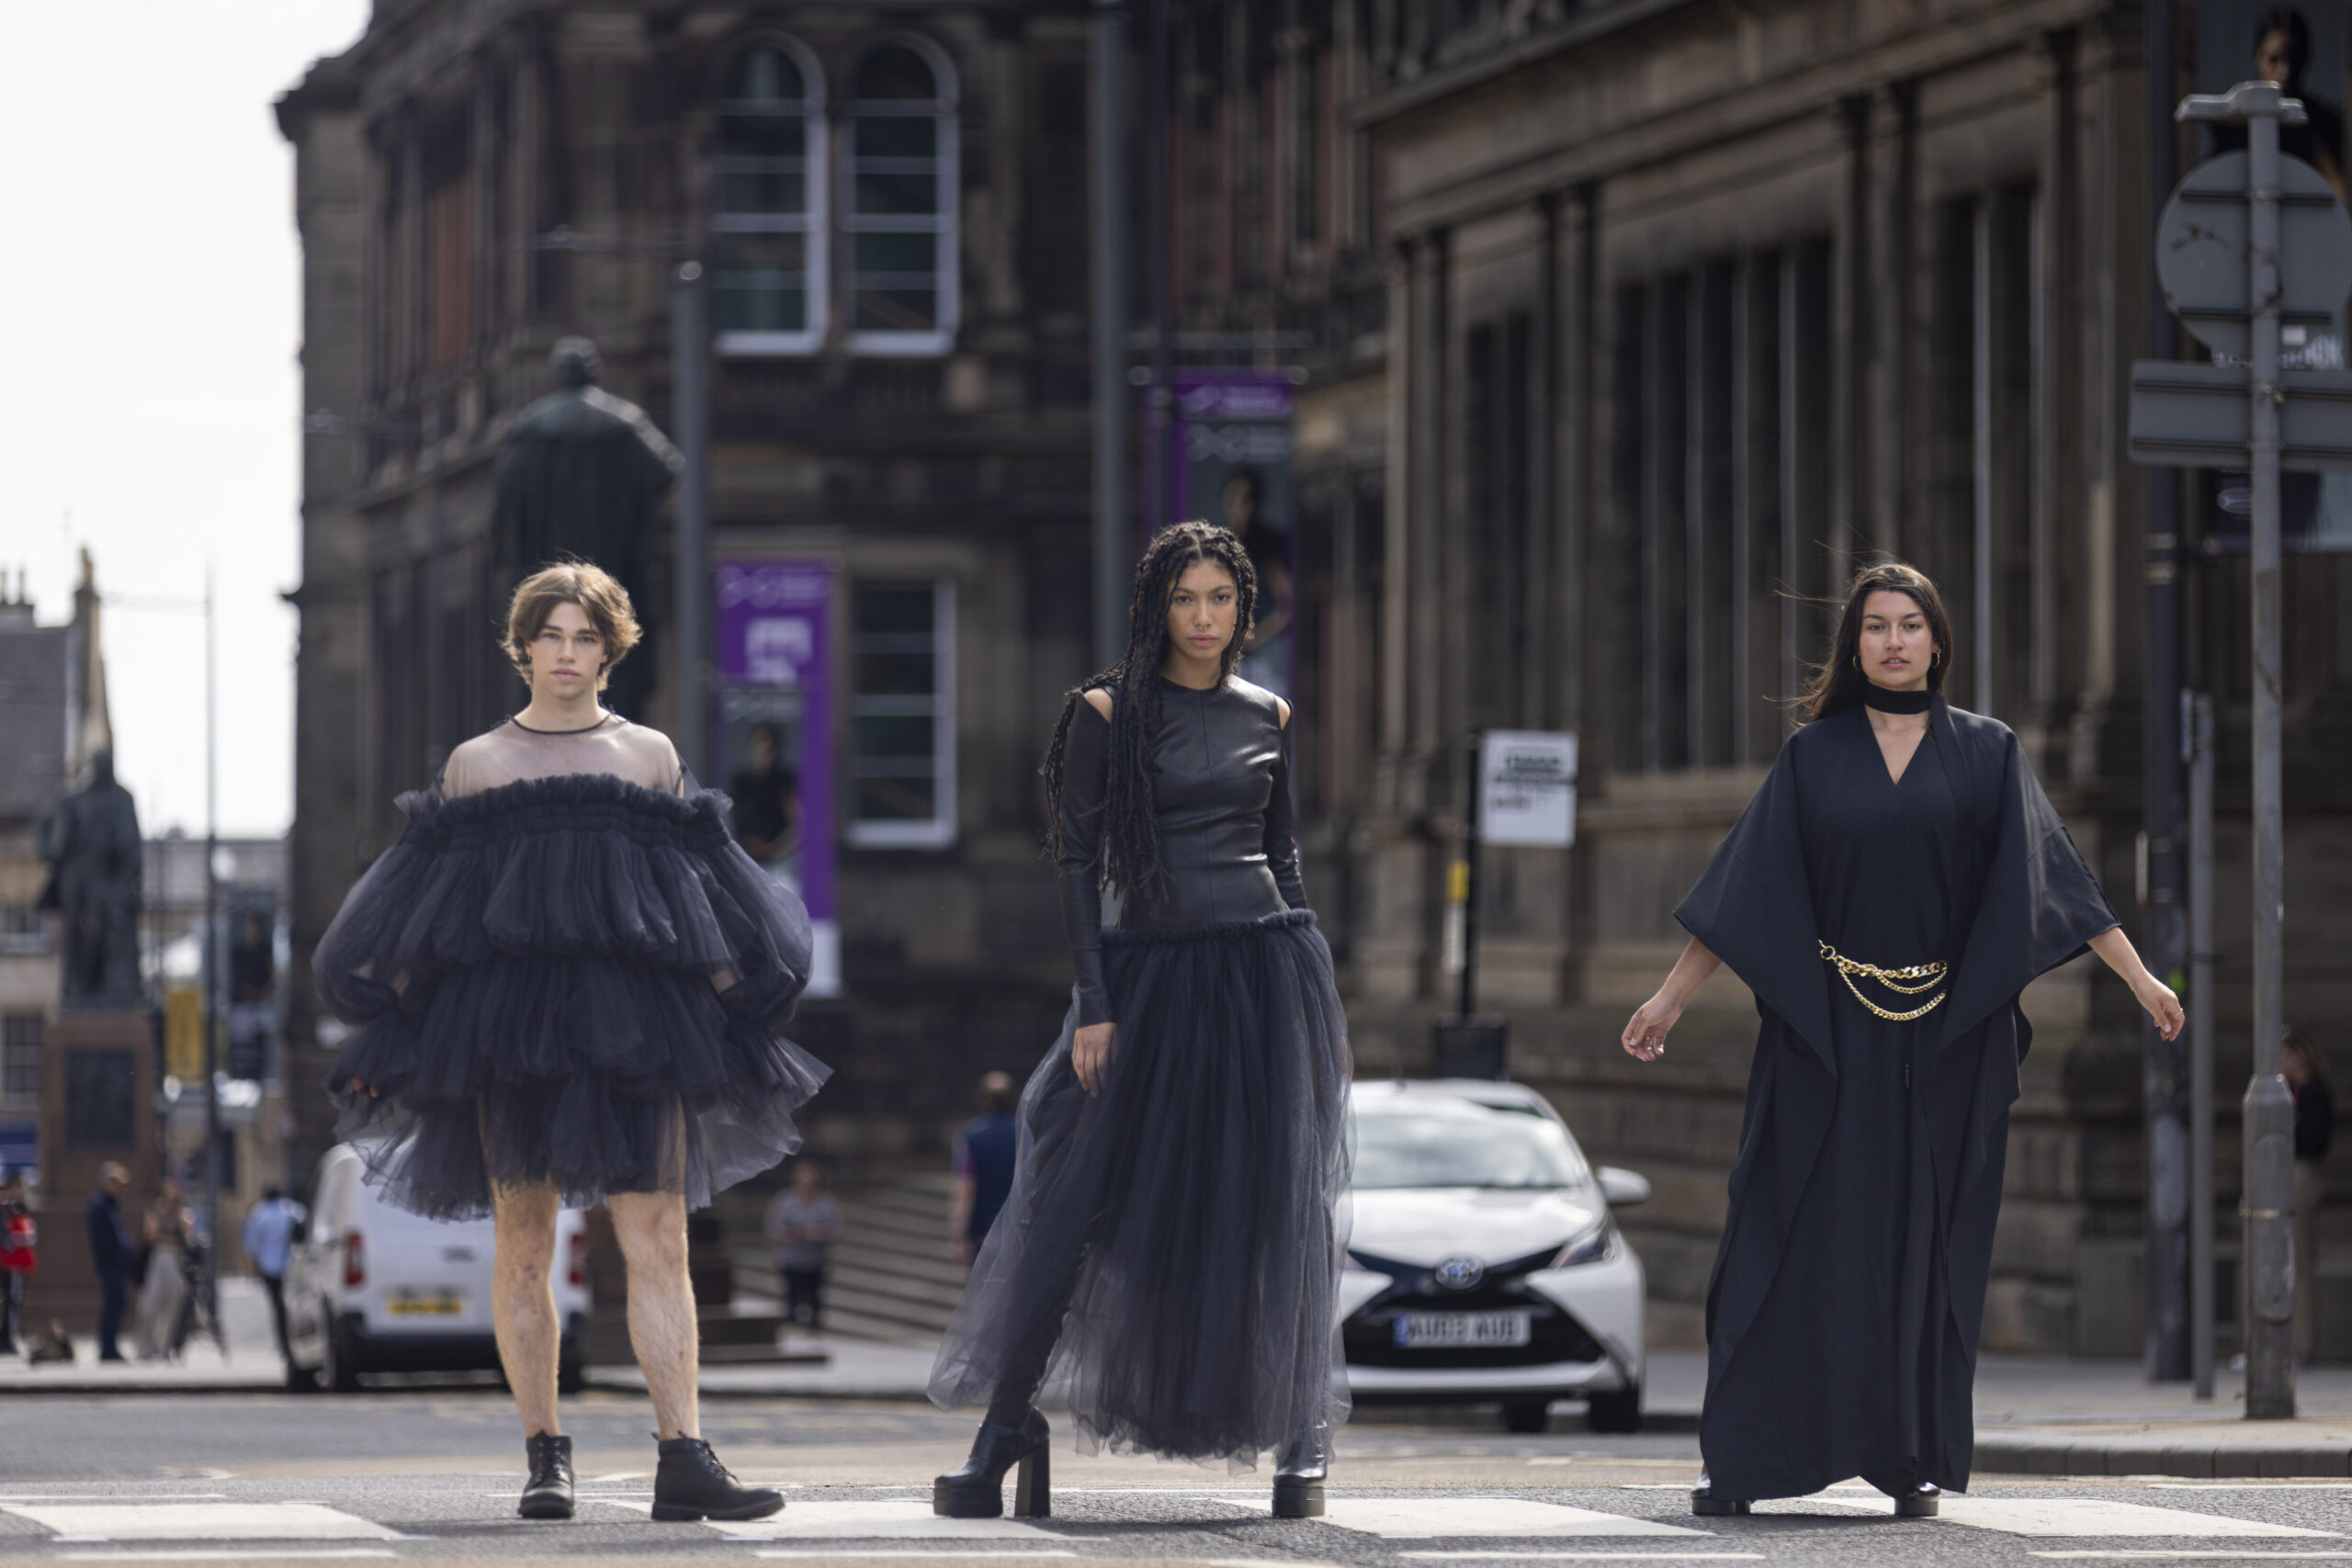 Beyond the Little Black Dress: Major fashion exhibition opens